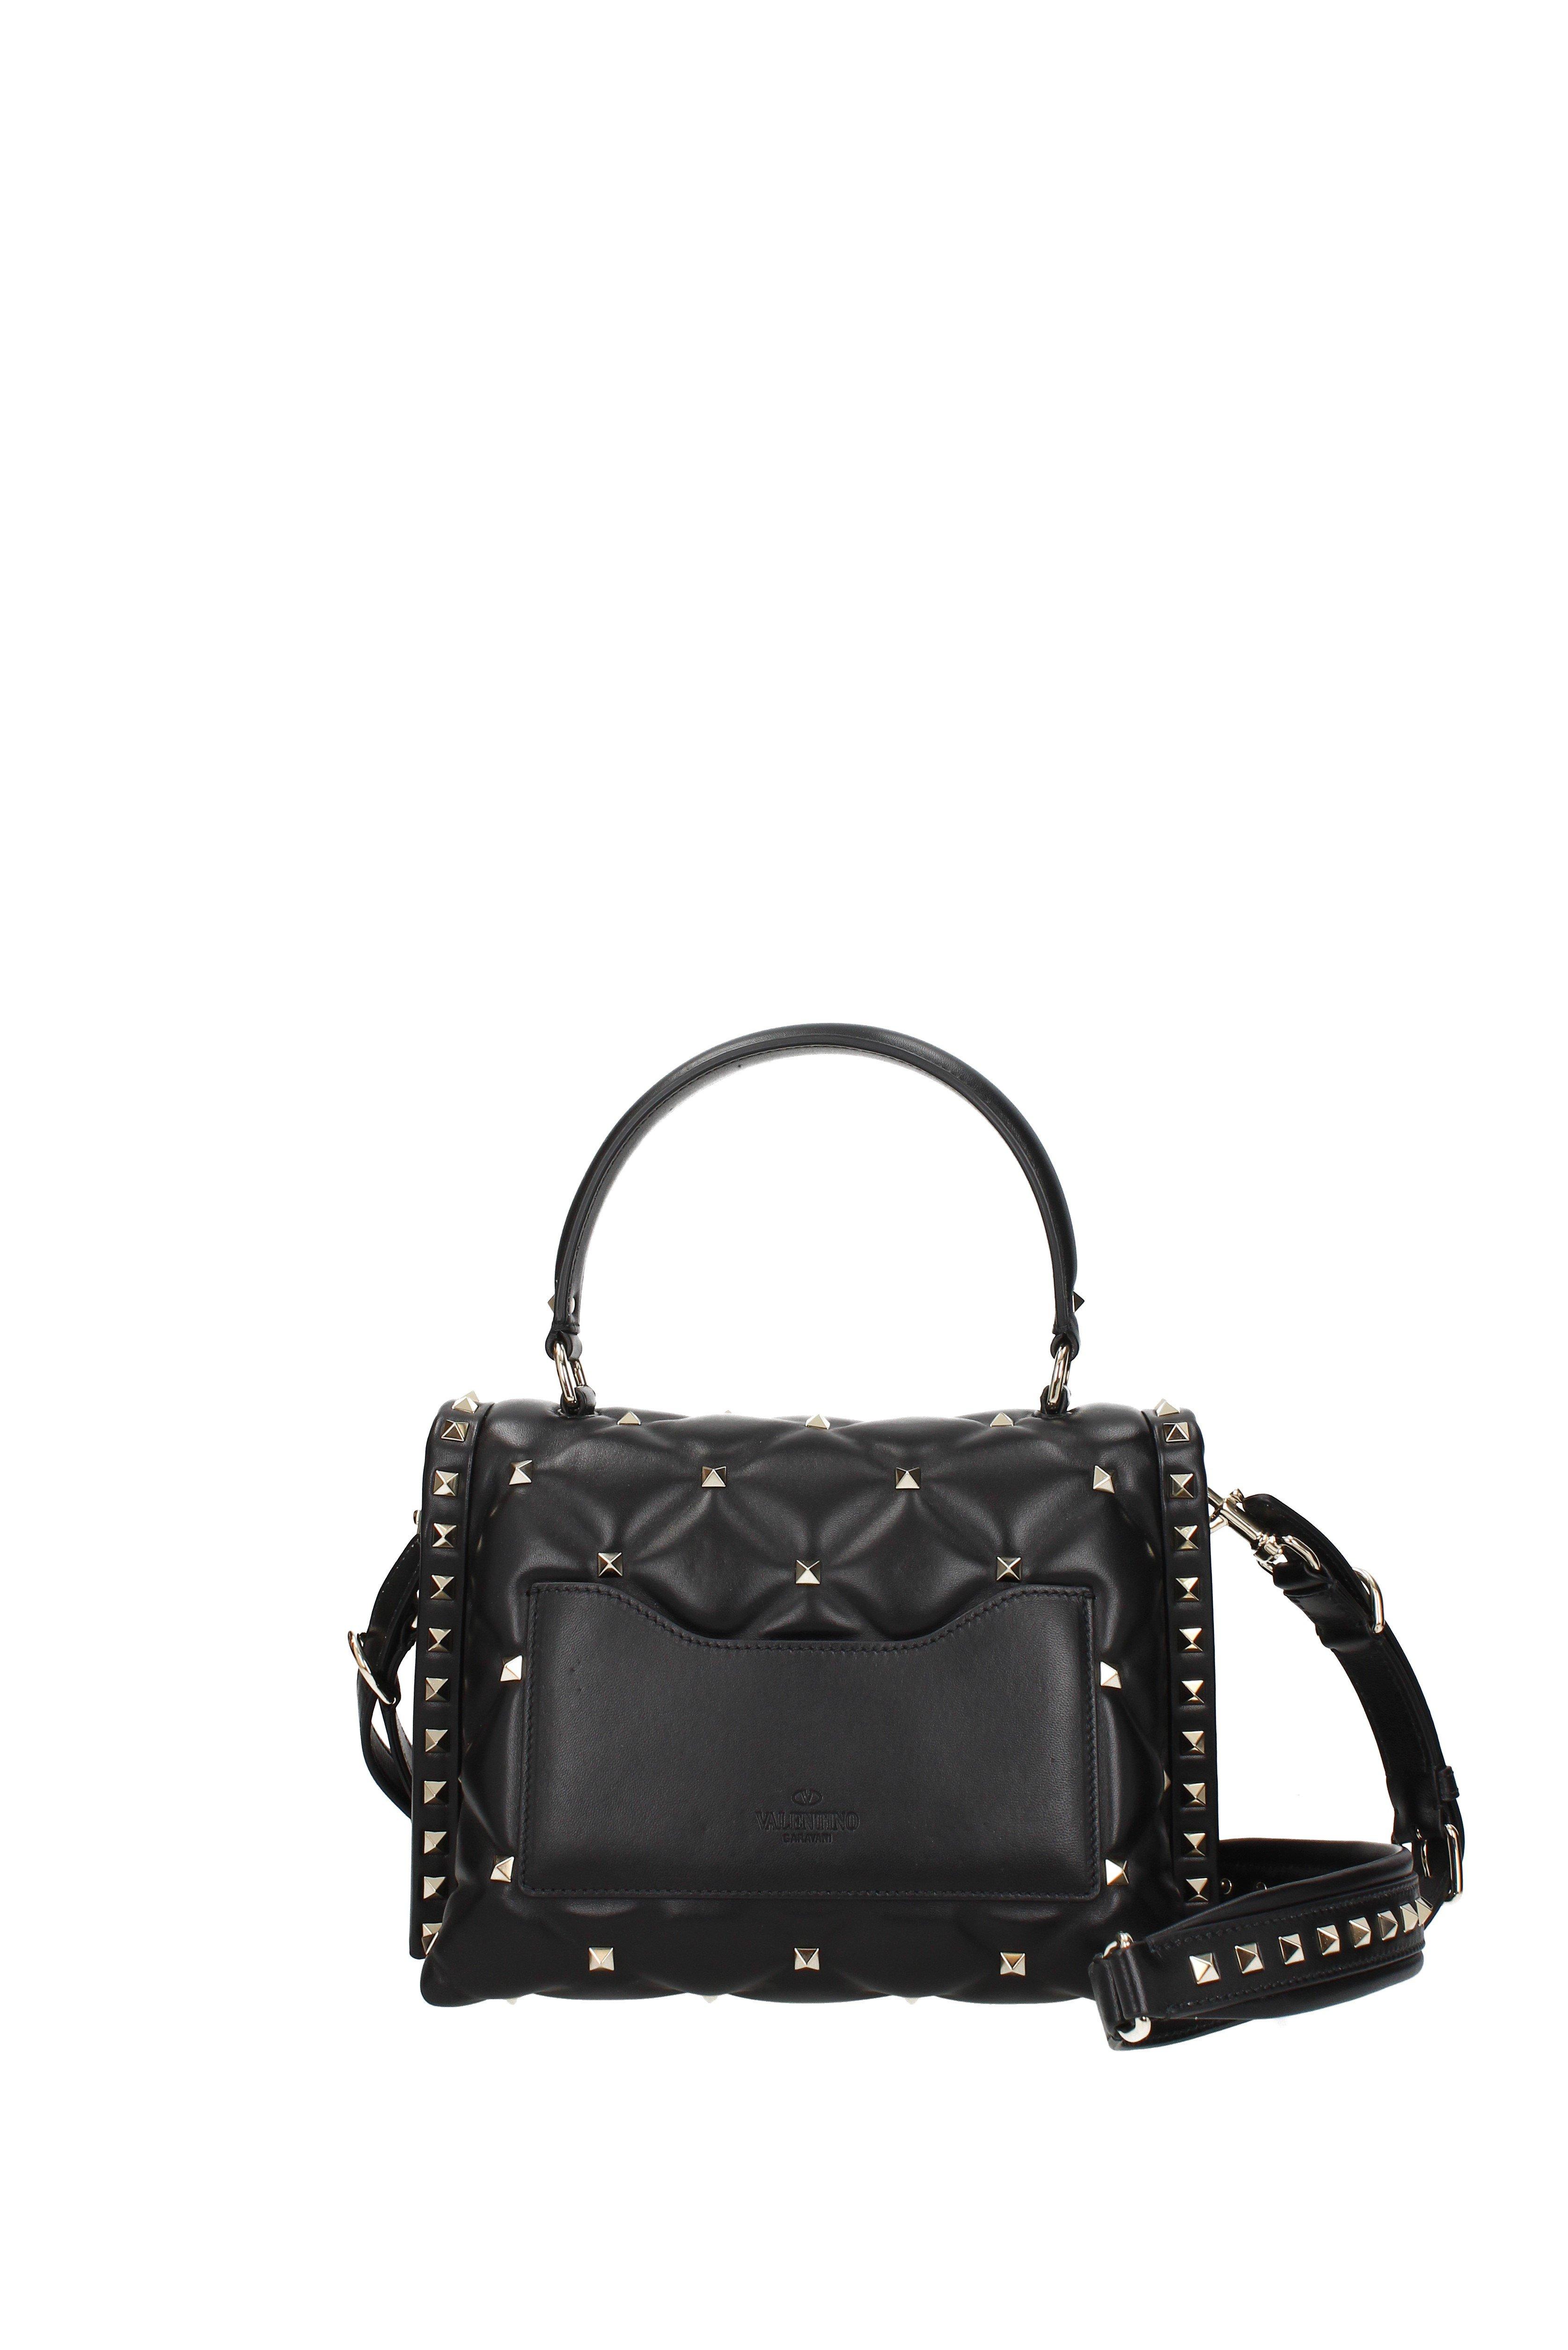 Valentino Handbags Women Black in Black - Lyst